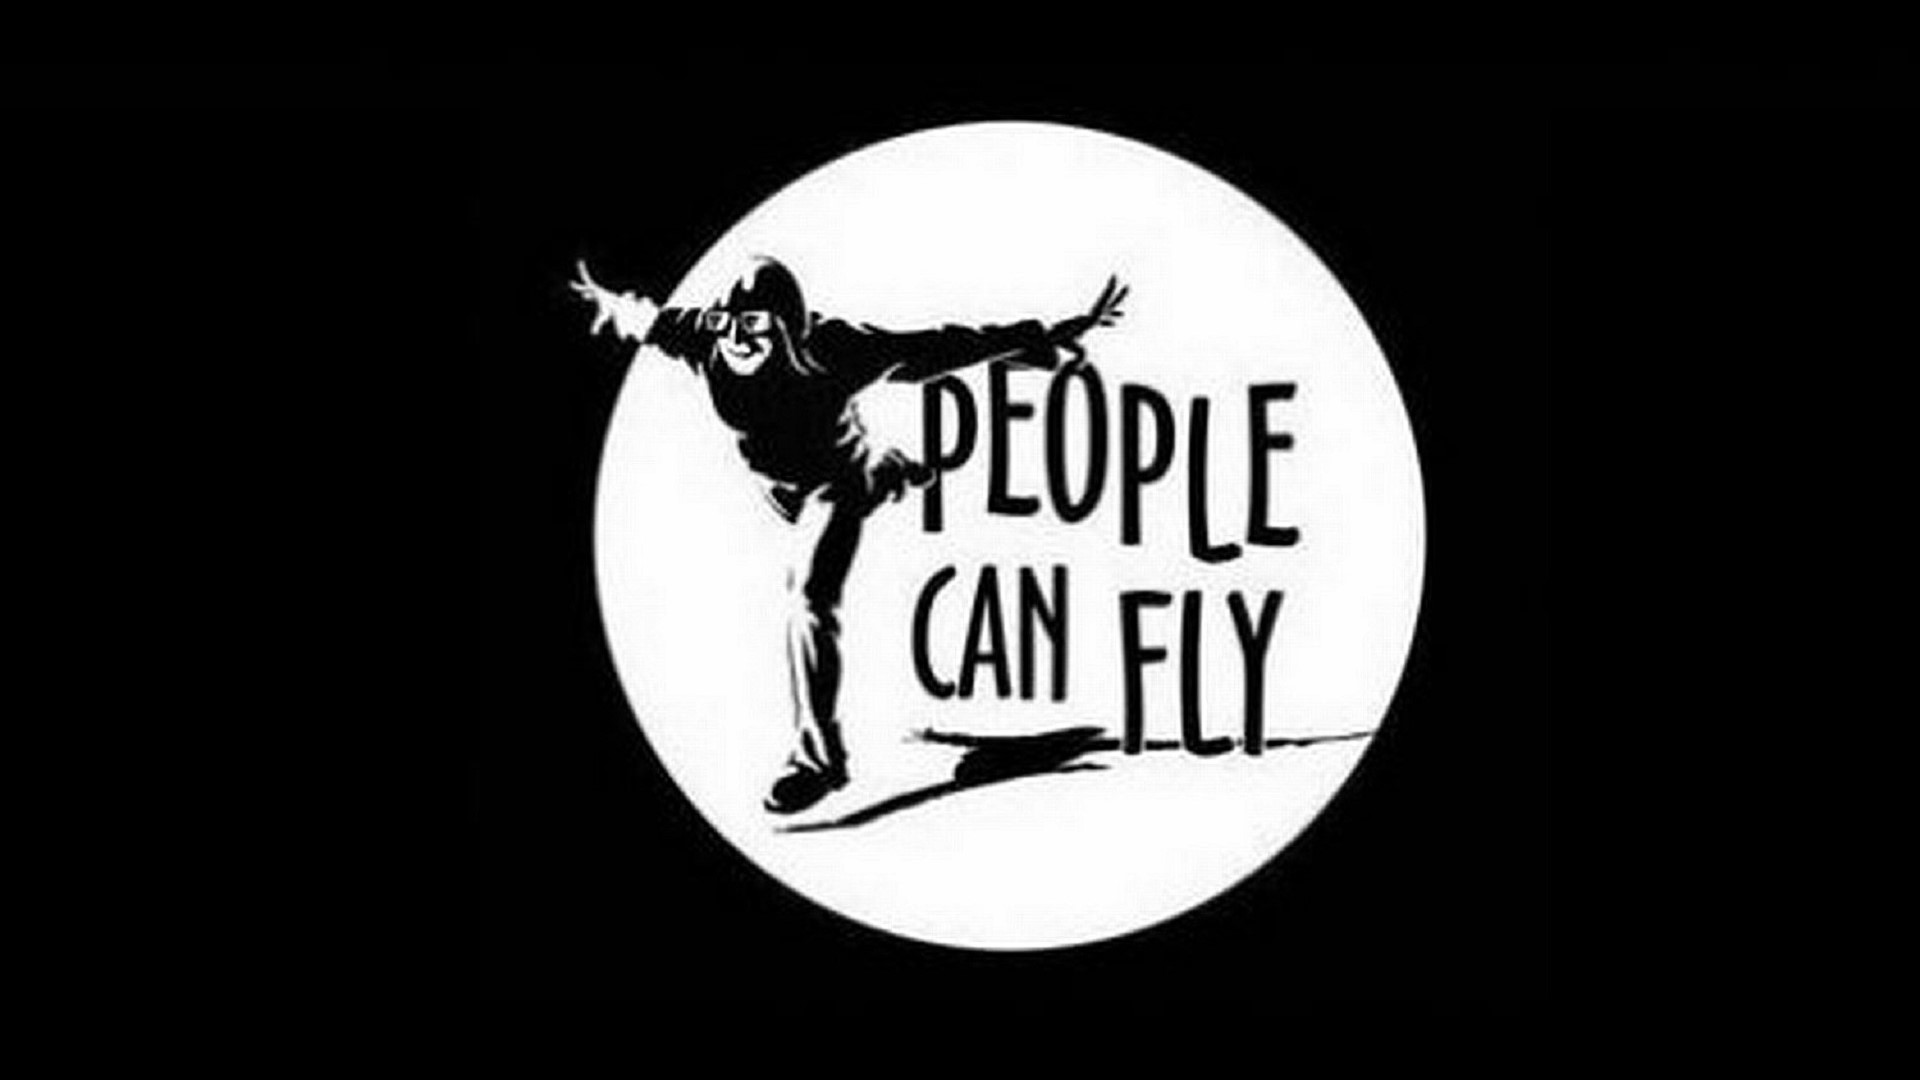 Logotip Ljudi mogu letjeti